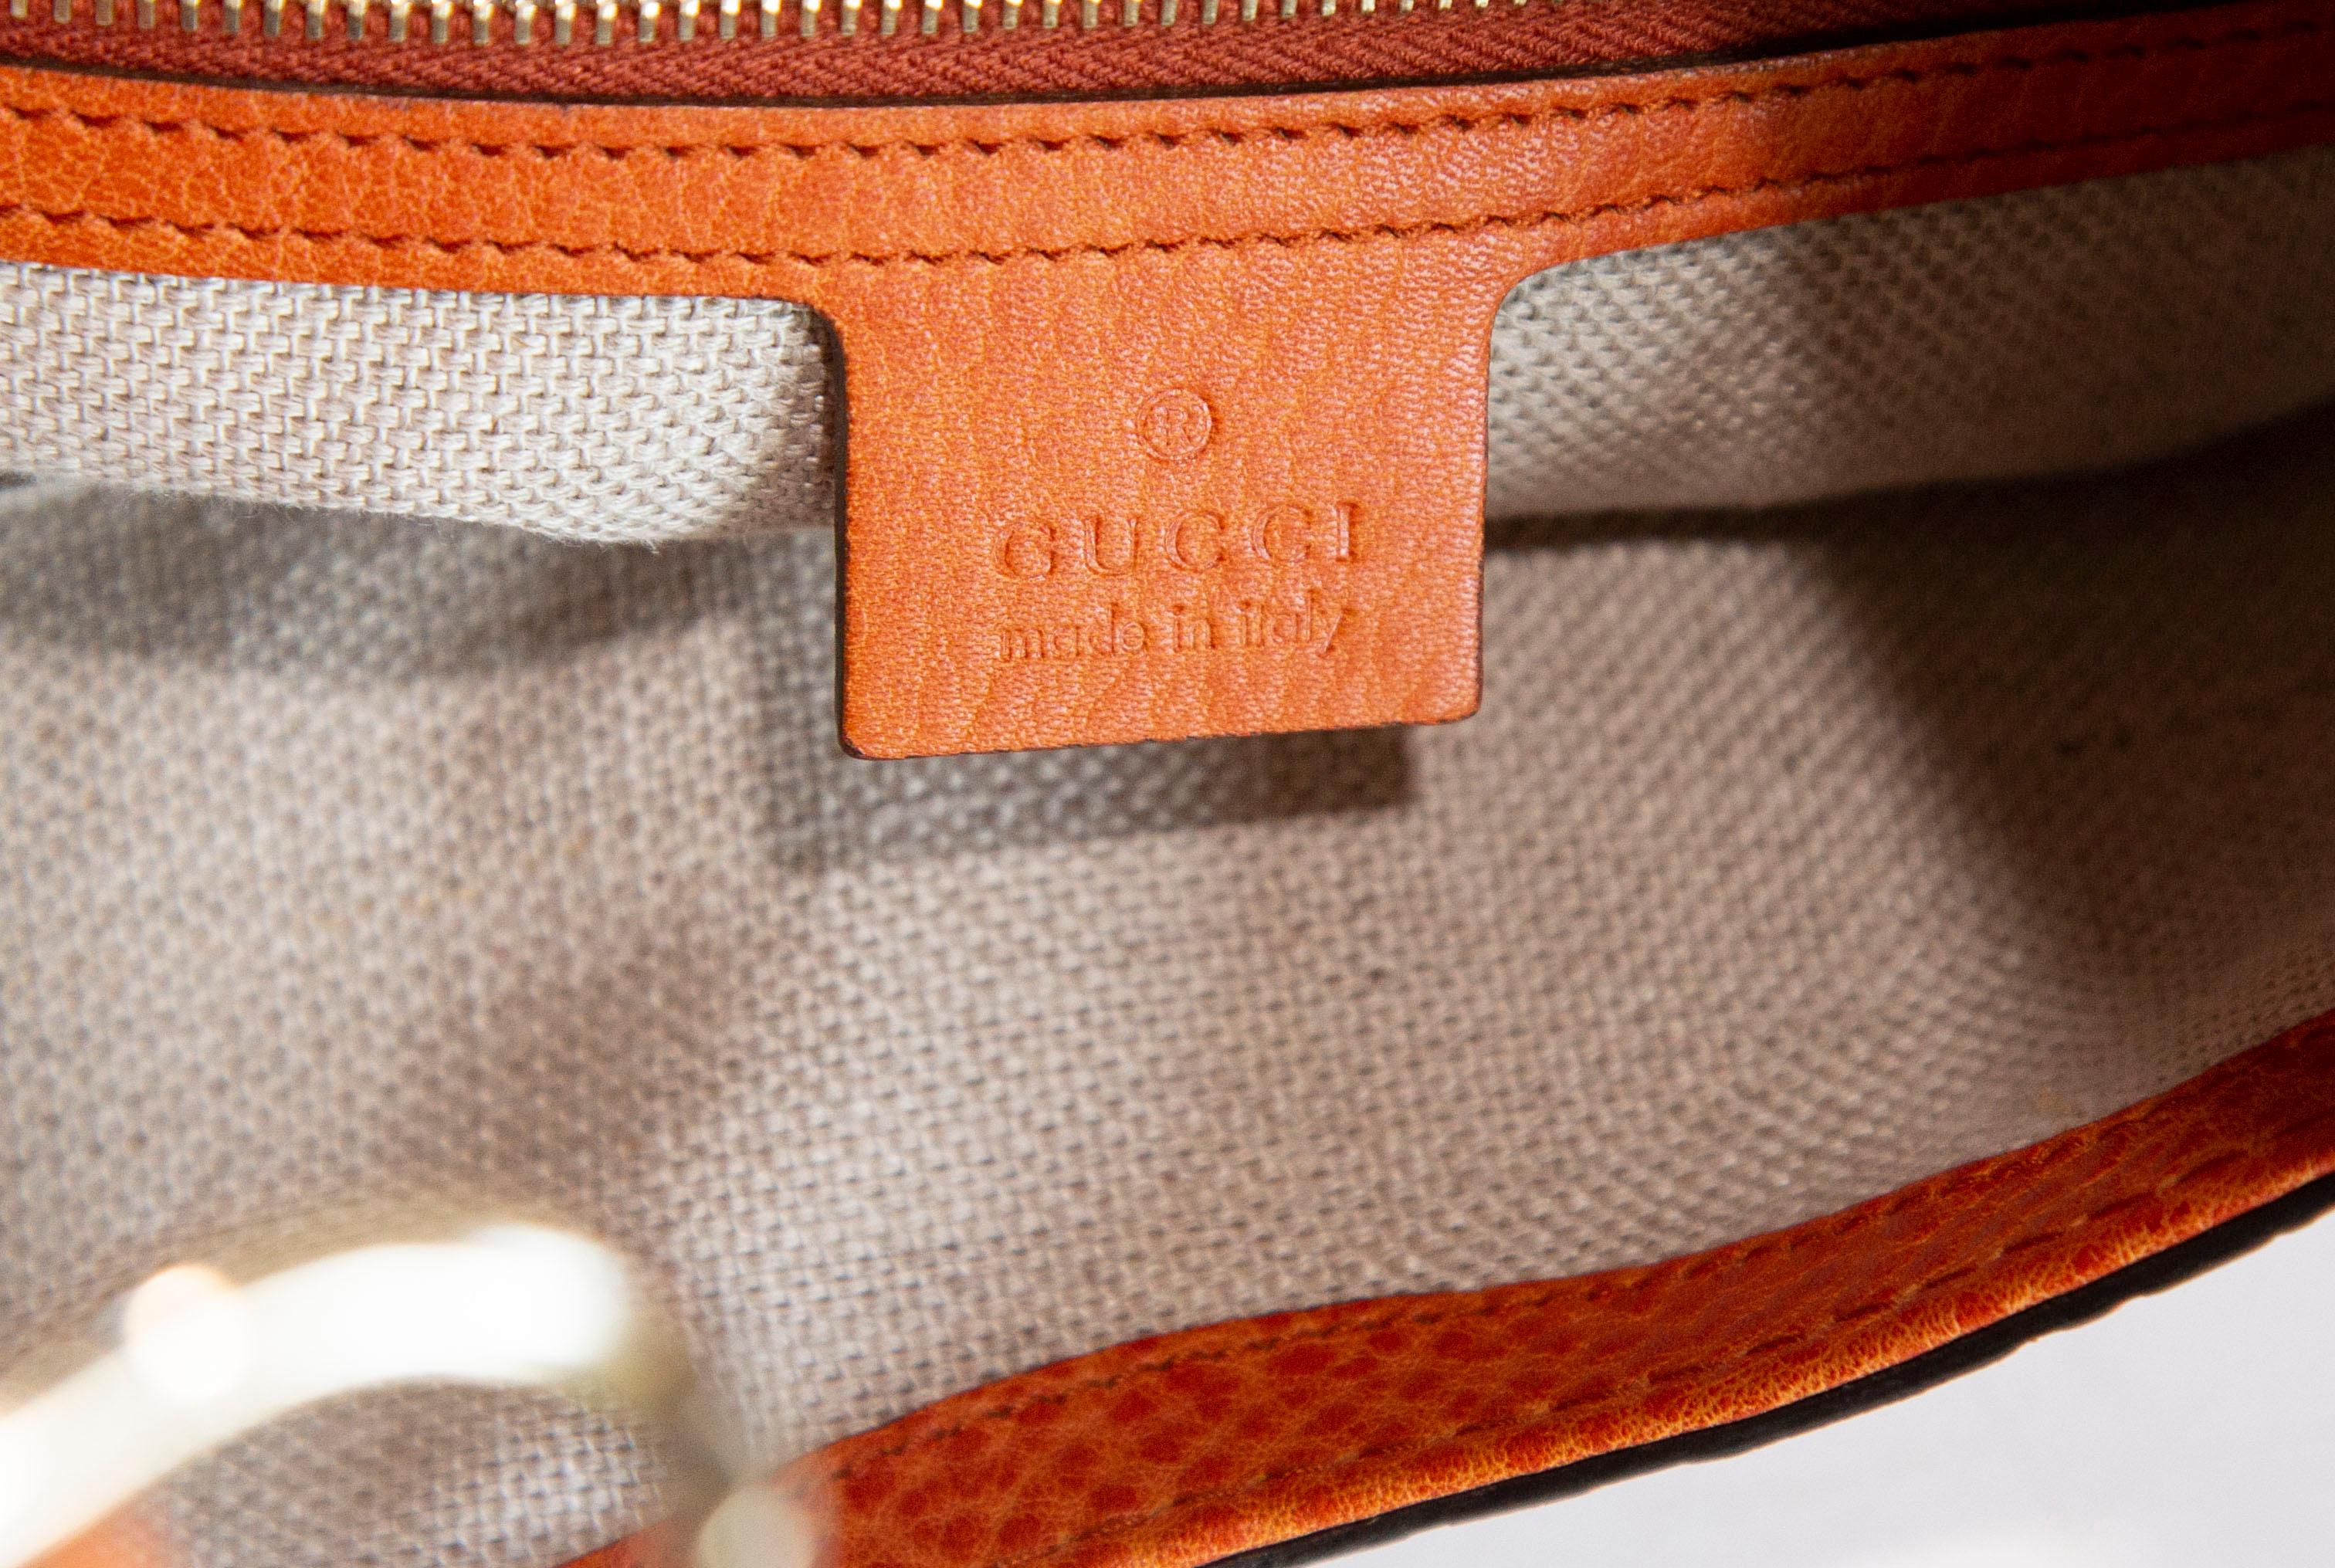 Gucci New Jackie Medium Shoulder Bag in Orange GG Guccissima Leather For Sale 3